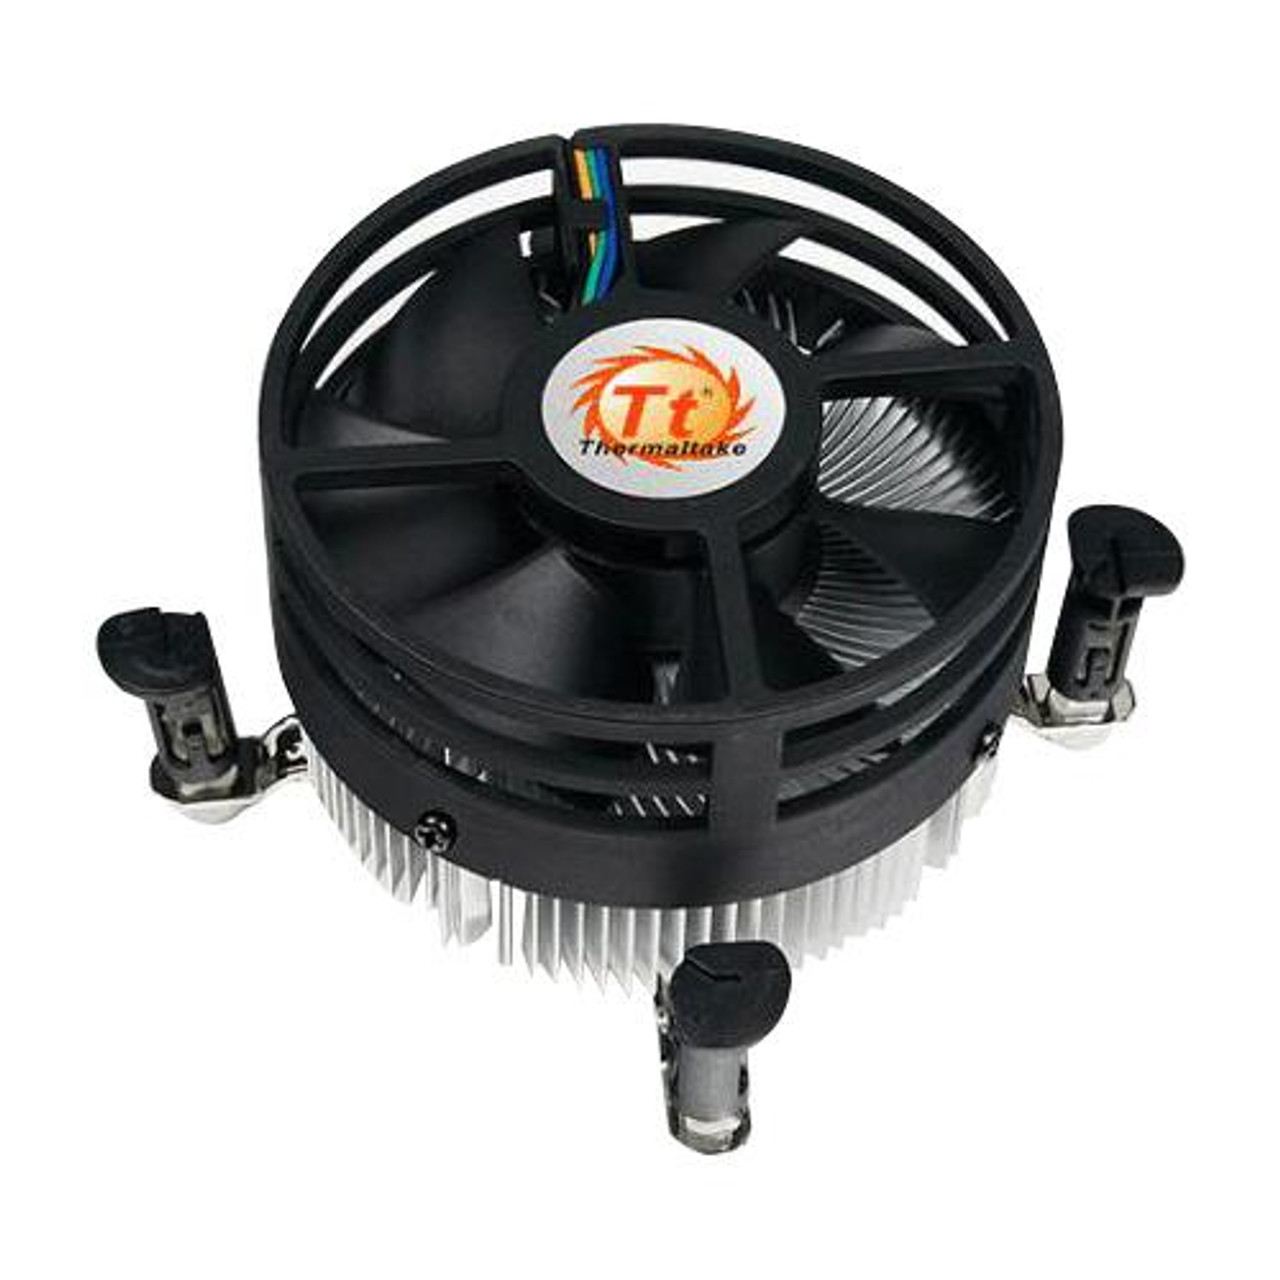 CL-P0501 Thermaltake CL-P0501 Cooling Fan/Heatsink 1 x 92 mm 4800 rpm 1 x Ball Bearing